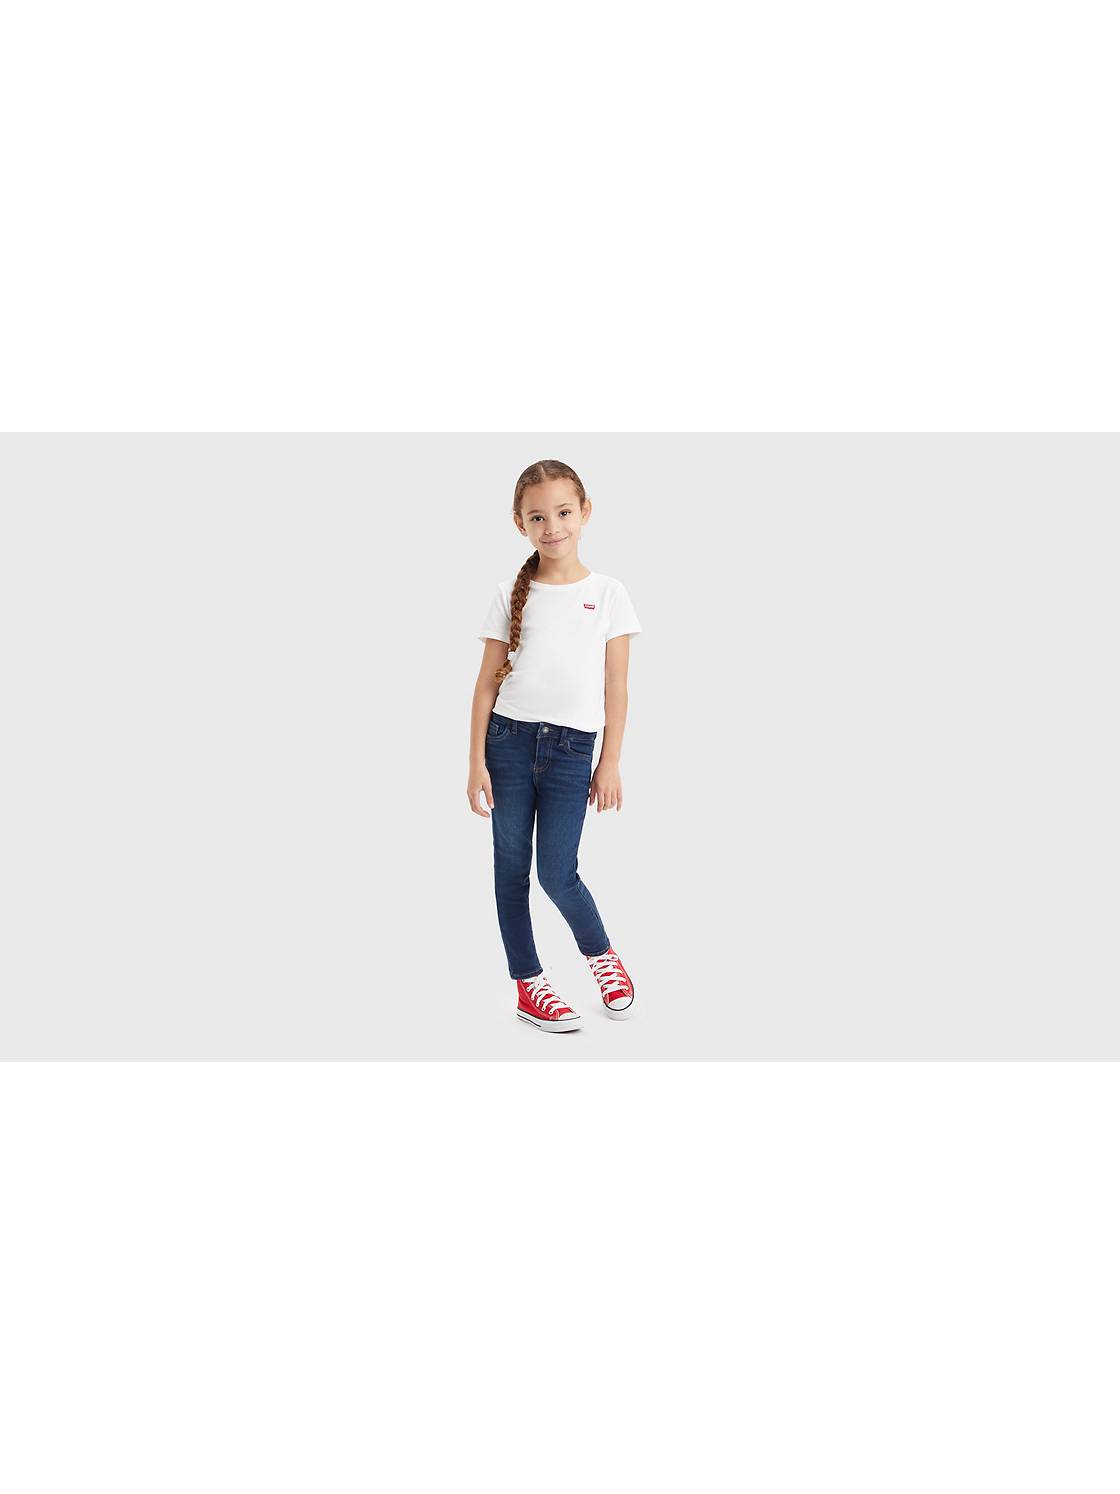 Kids 710™ Super Skinny Jeans 1